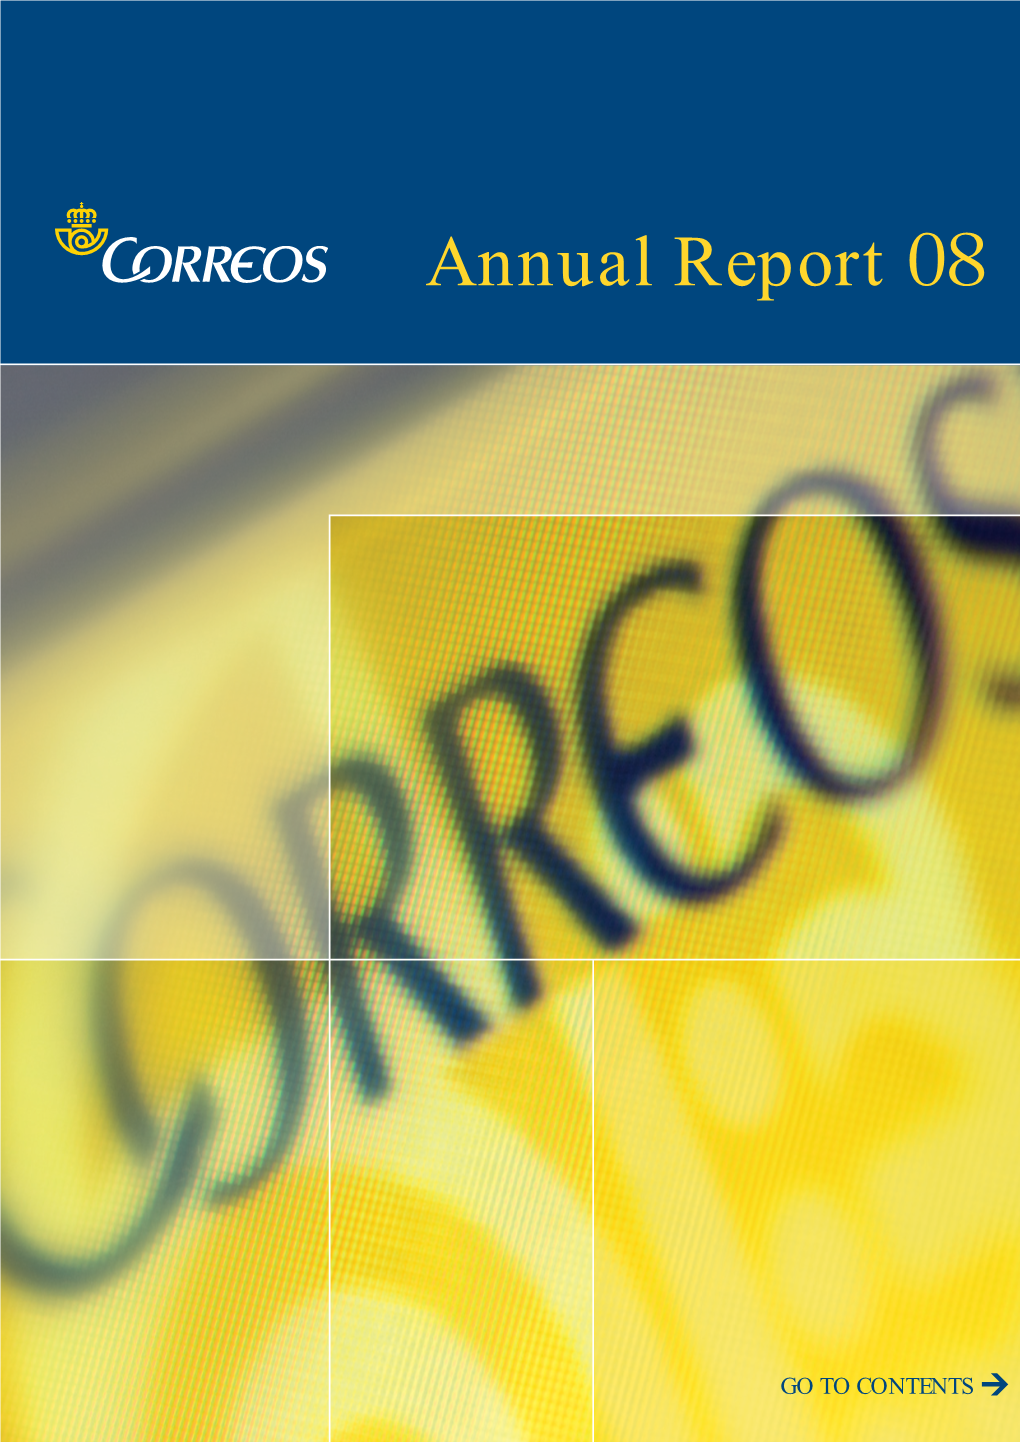 Annual Report 08